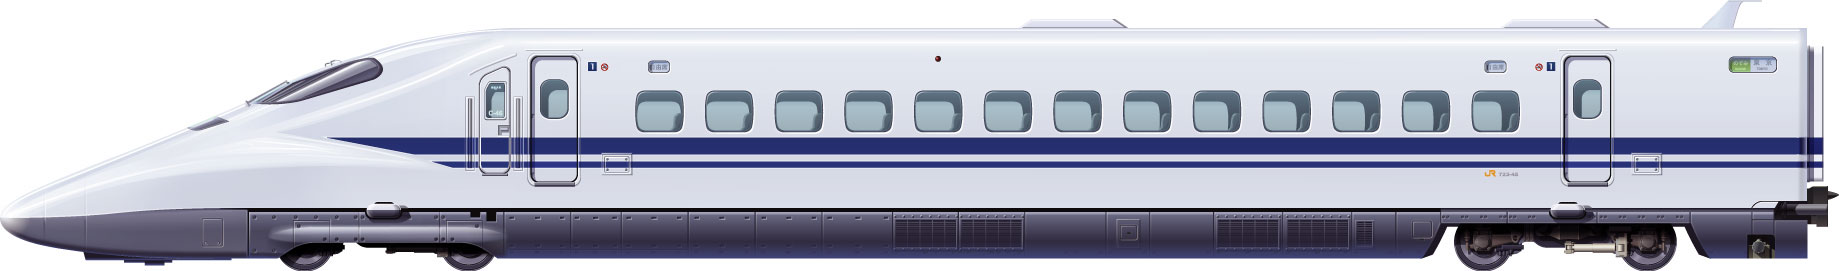 Jr 新幹線700系 サイドビューイラスト